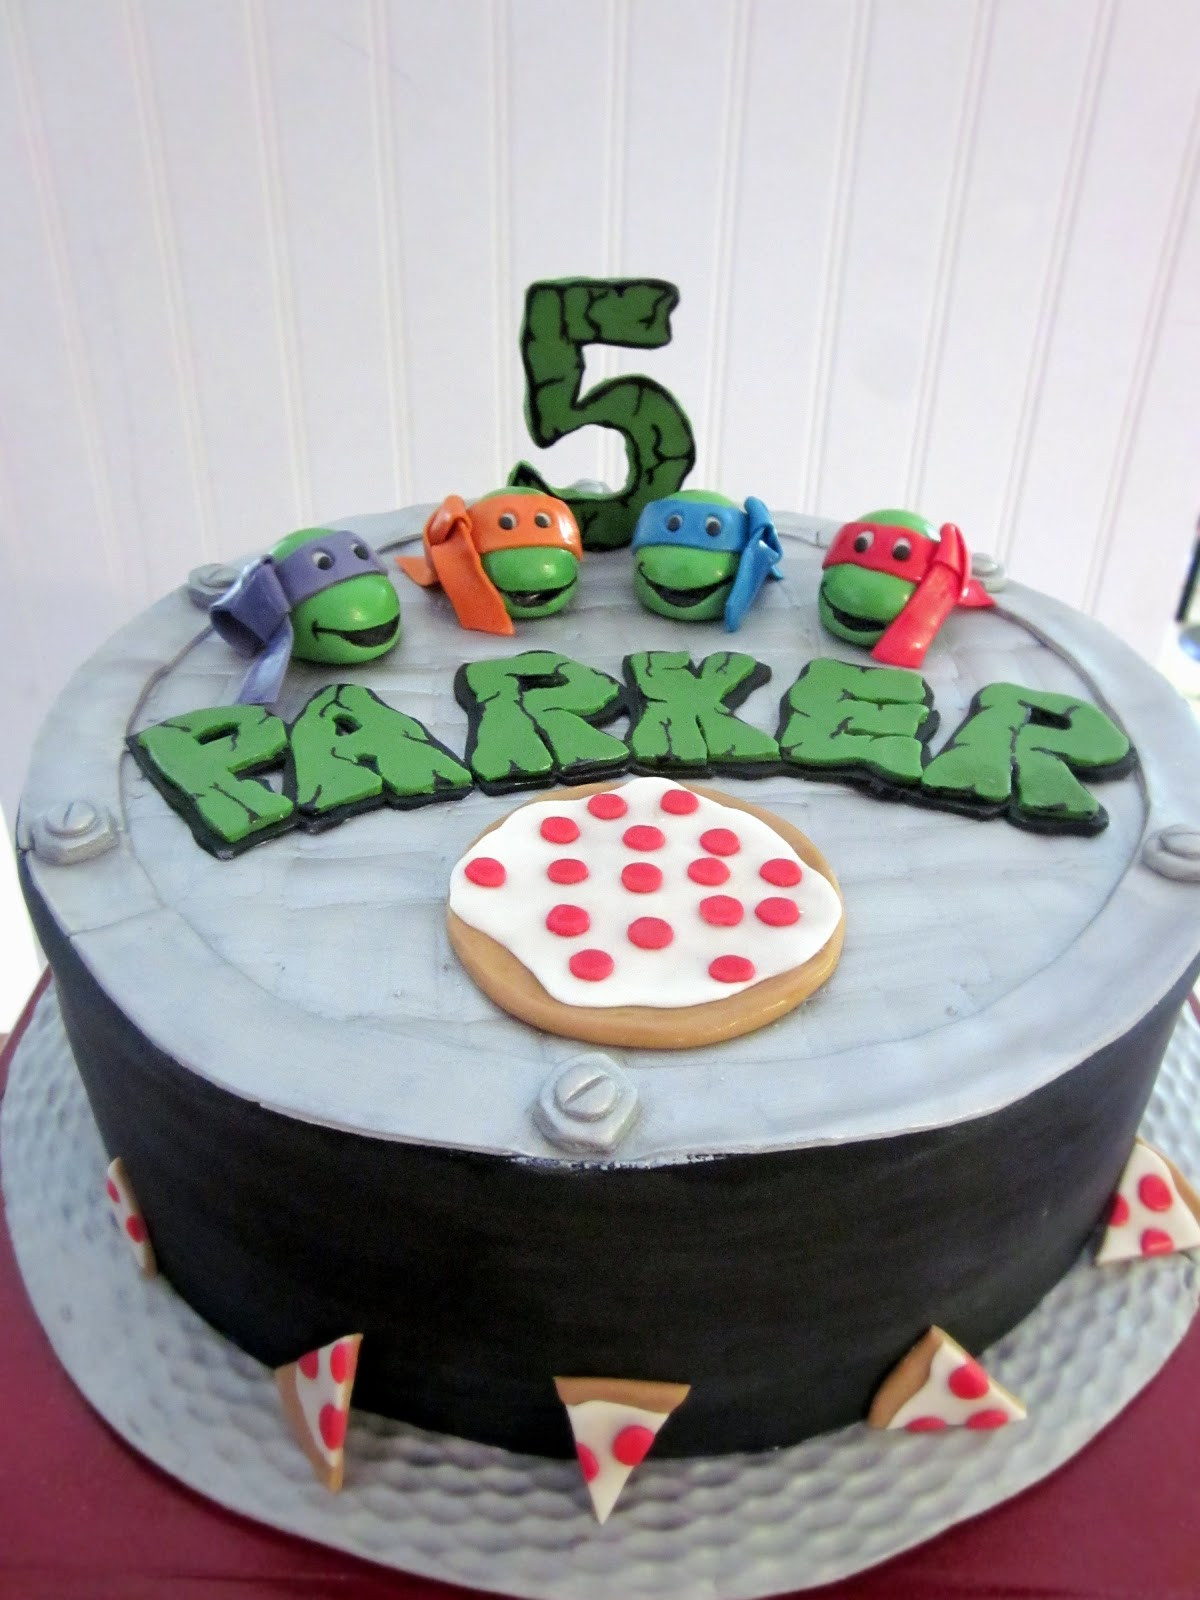 Ninja Turtle Birthday Cake Ideas
 Darlin Designs Teenage Mutant Ninja Turtle Birthday Cake